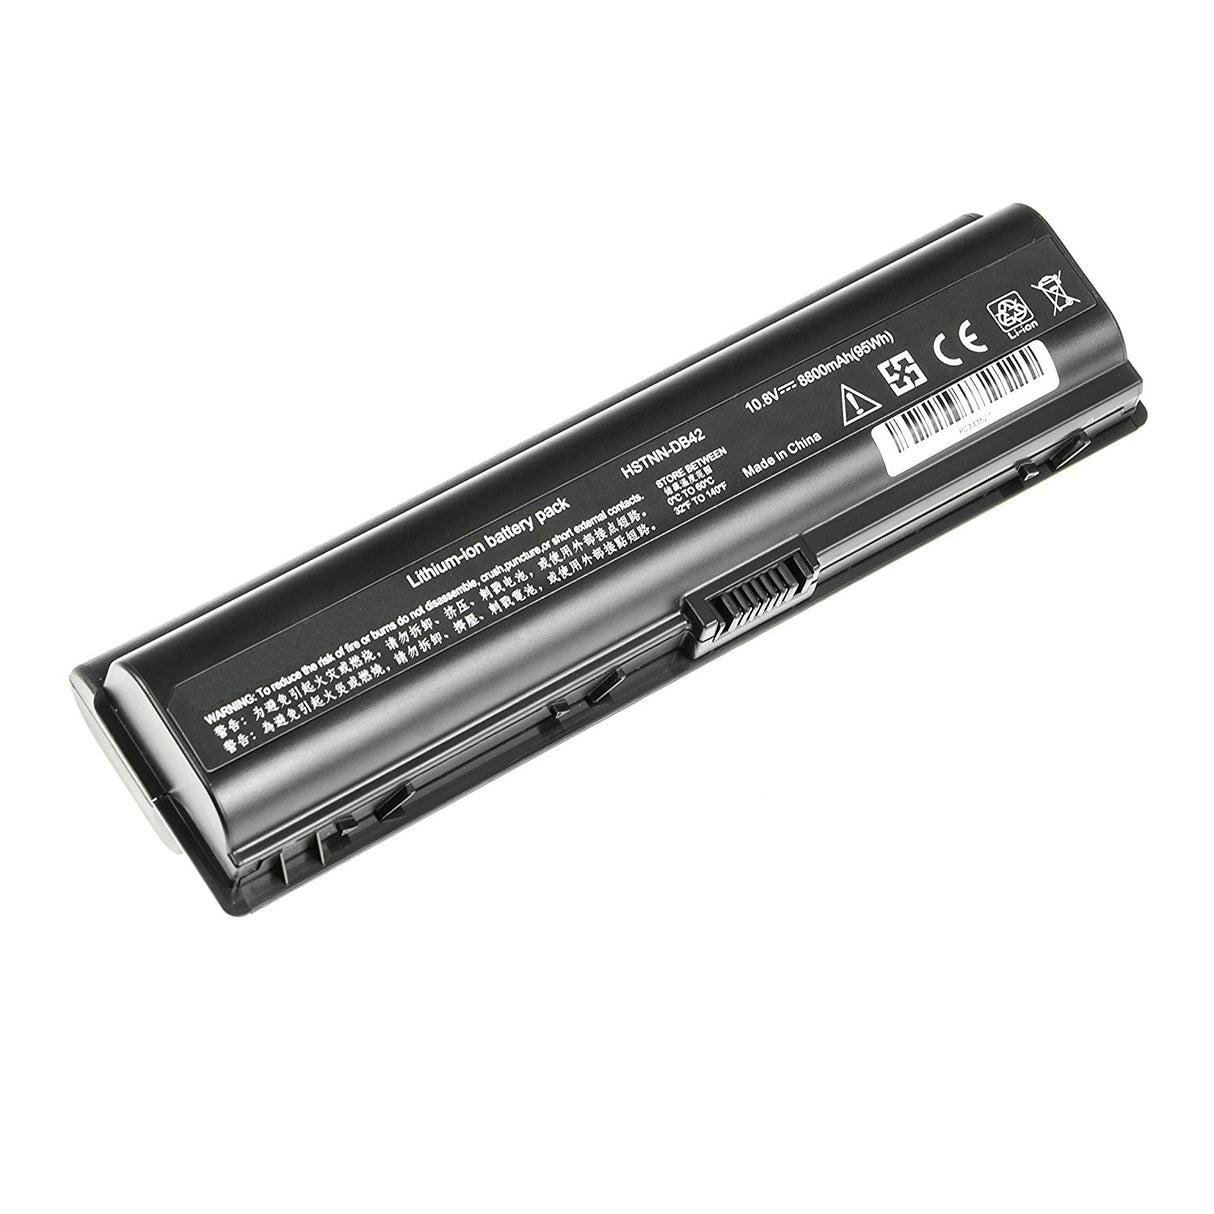 Bateria Compatível para HP Pavilion DV2000 DV2700 DV6000 HSTNN-LB42 8800mAh - Multi4you®